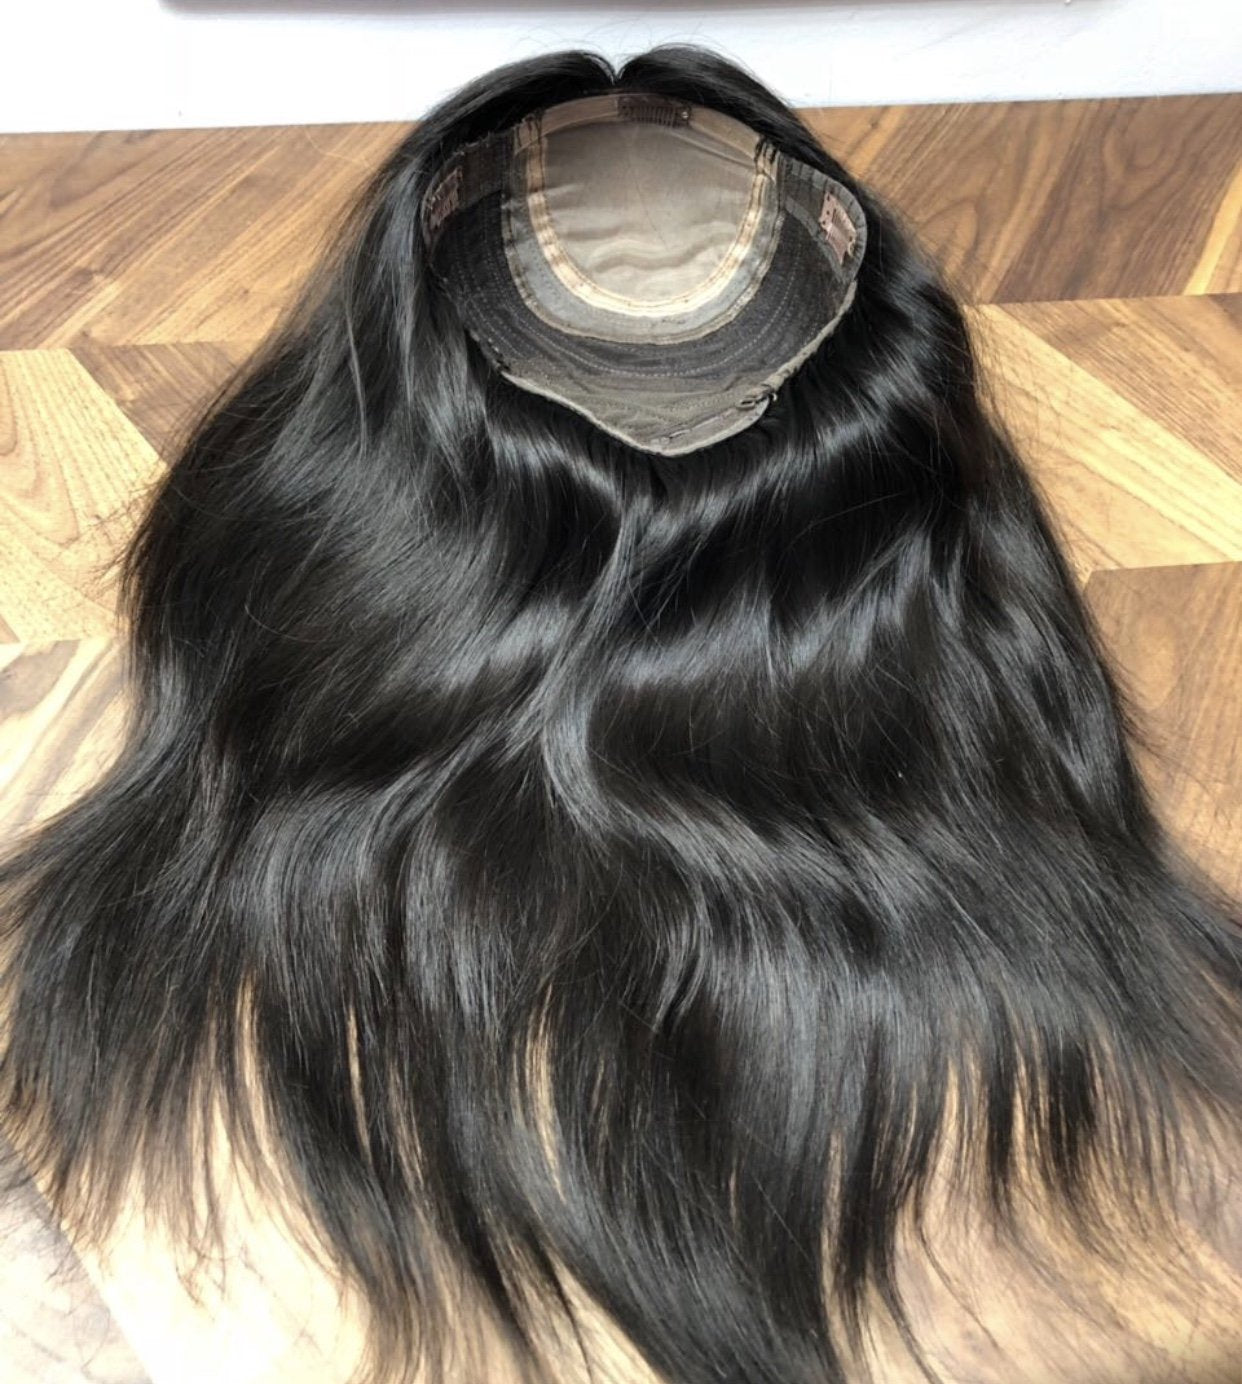 Wigs Ombre 6 and DB4 Color GVA hair_Retail price - GVA hair